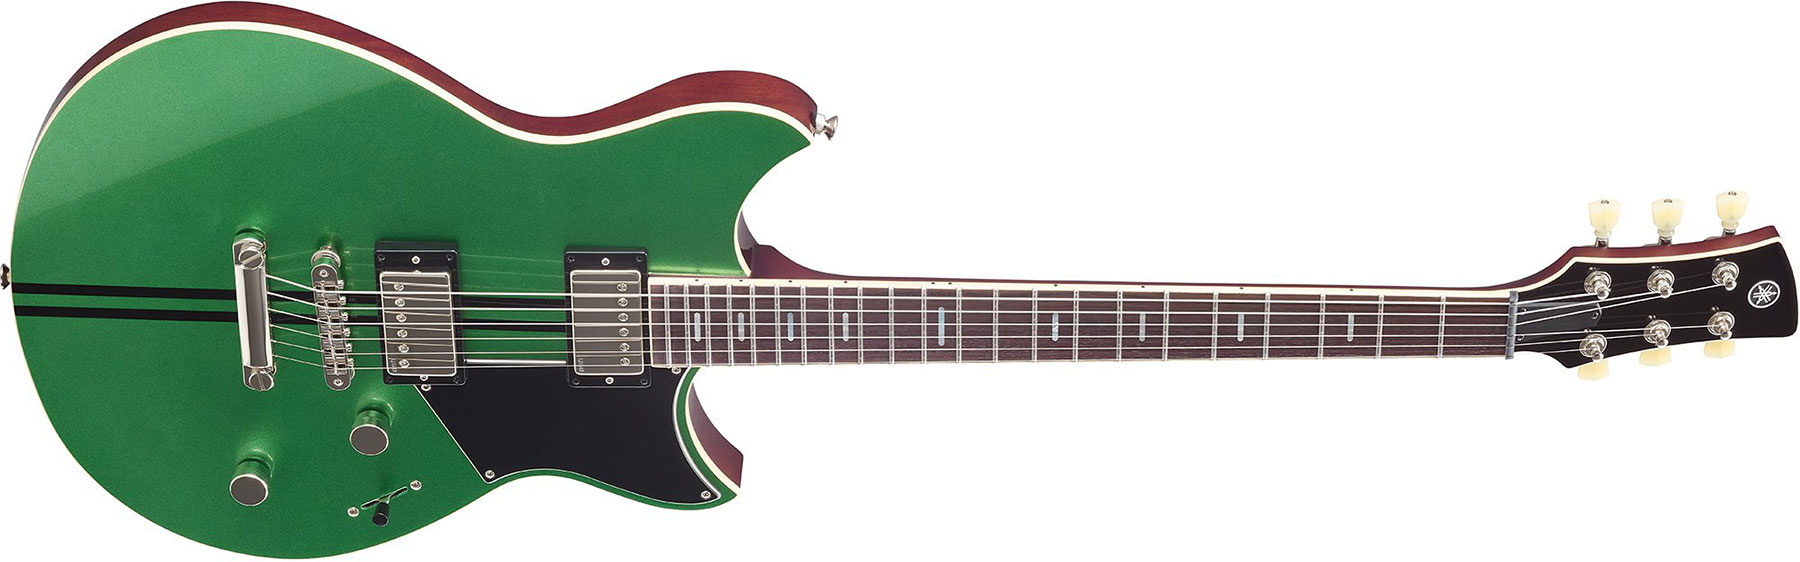 Yamaha Rss20 Revstar Standard Hh Ht Rw - Flash Green - Guitarra eléctrica de doble corte - Variation 1